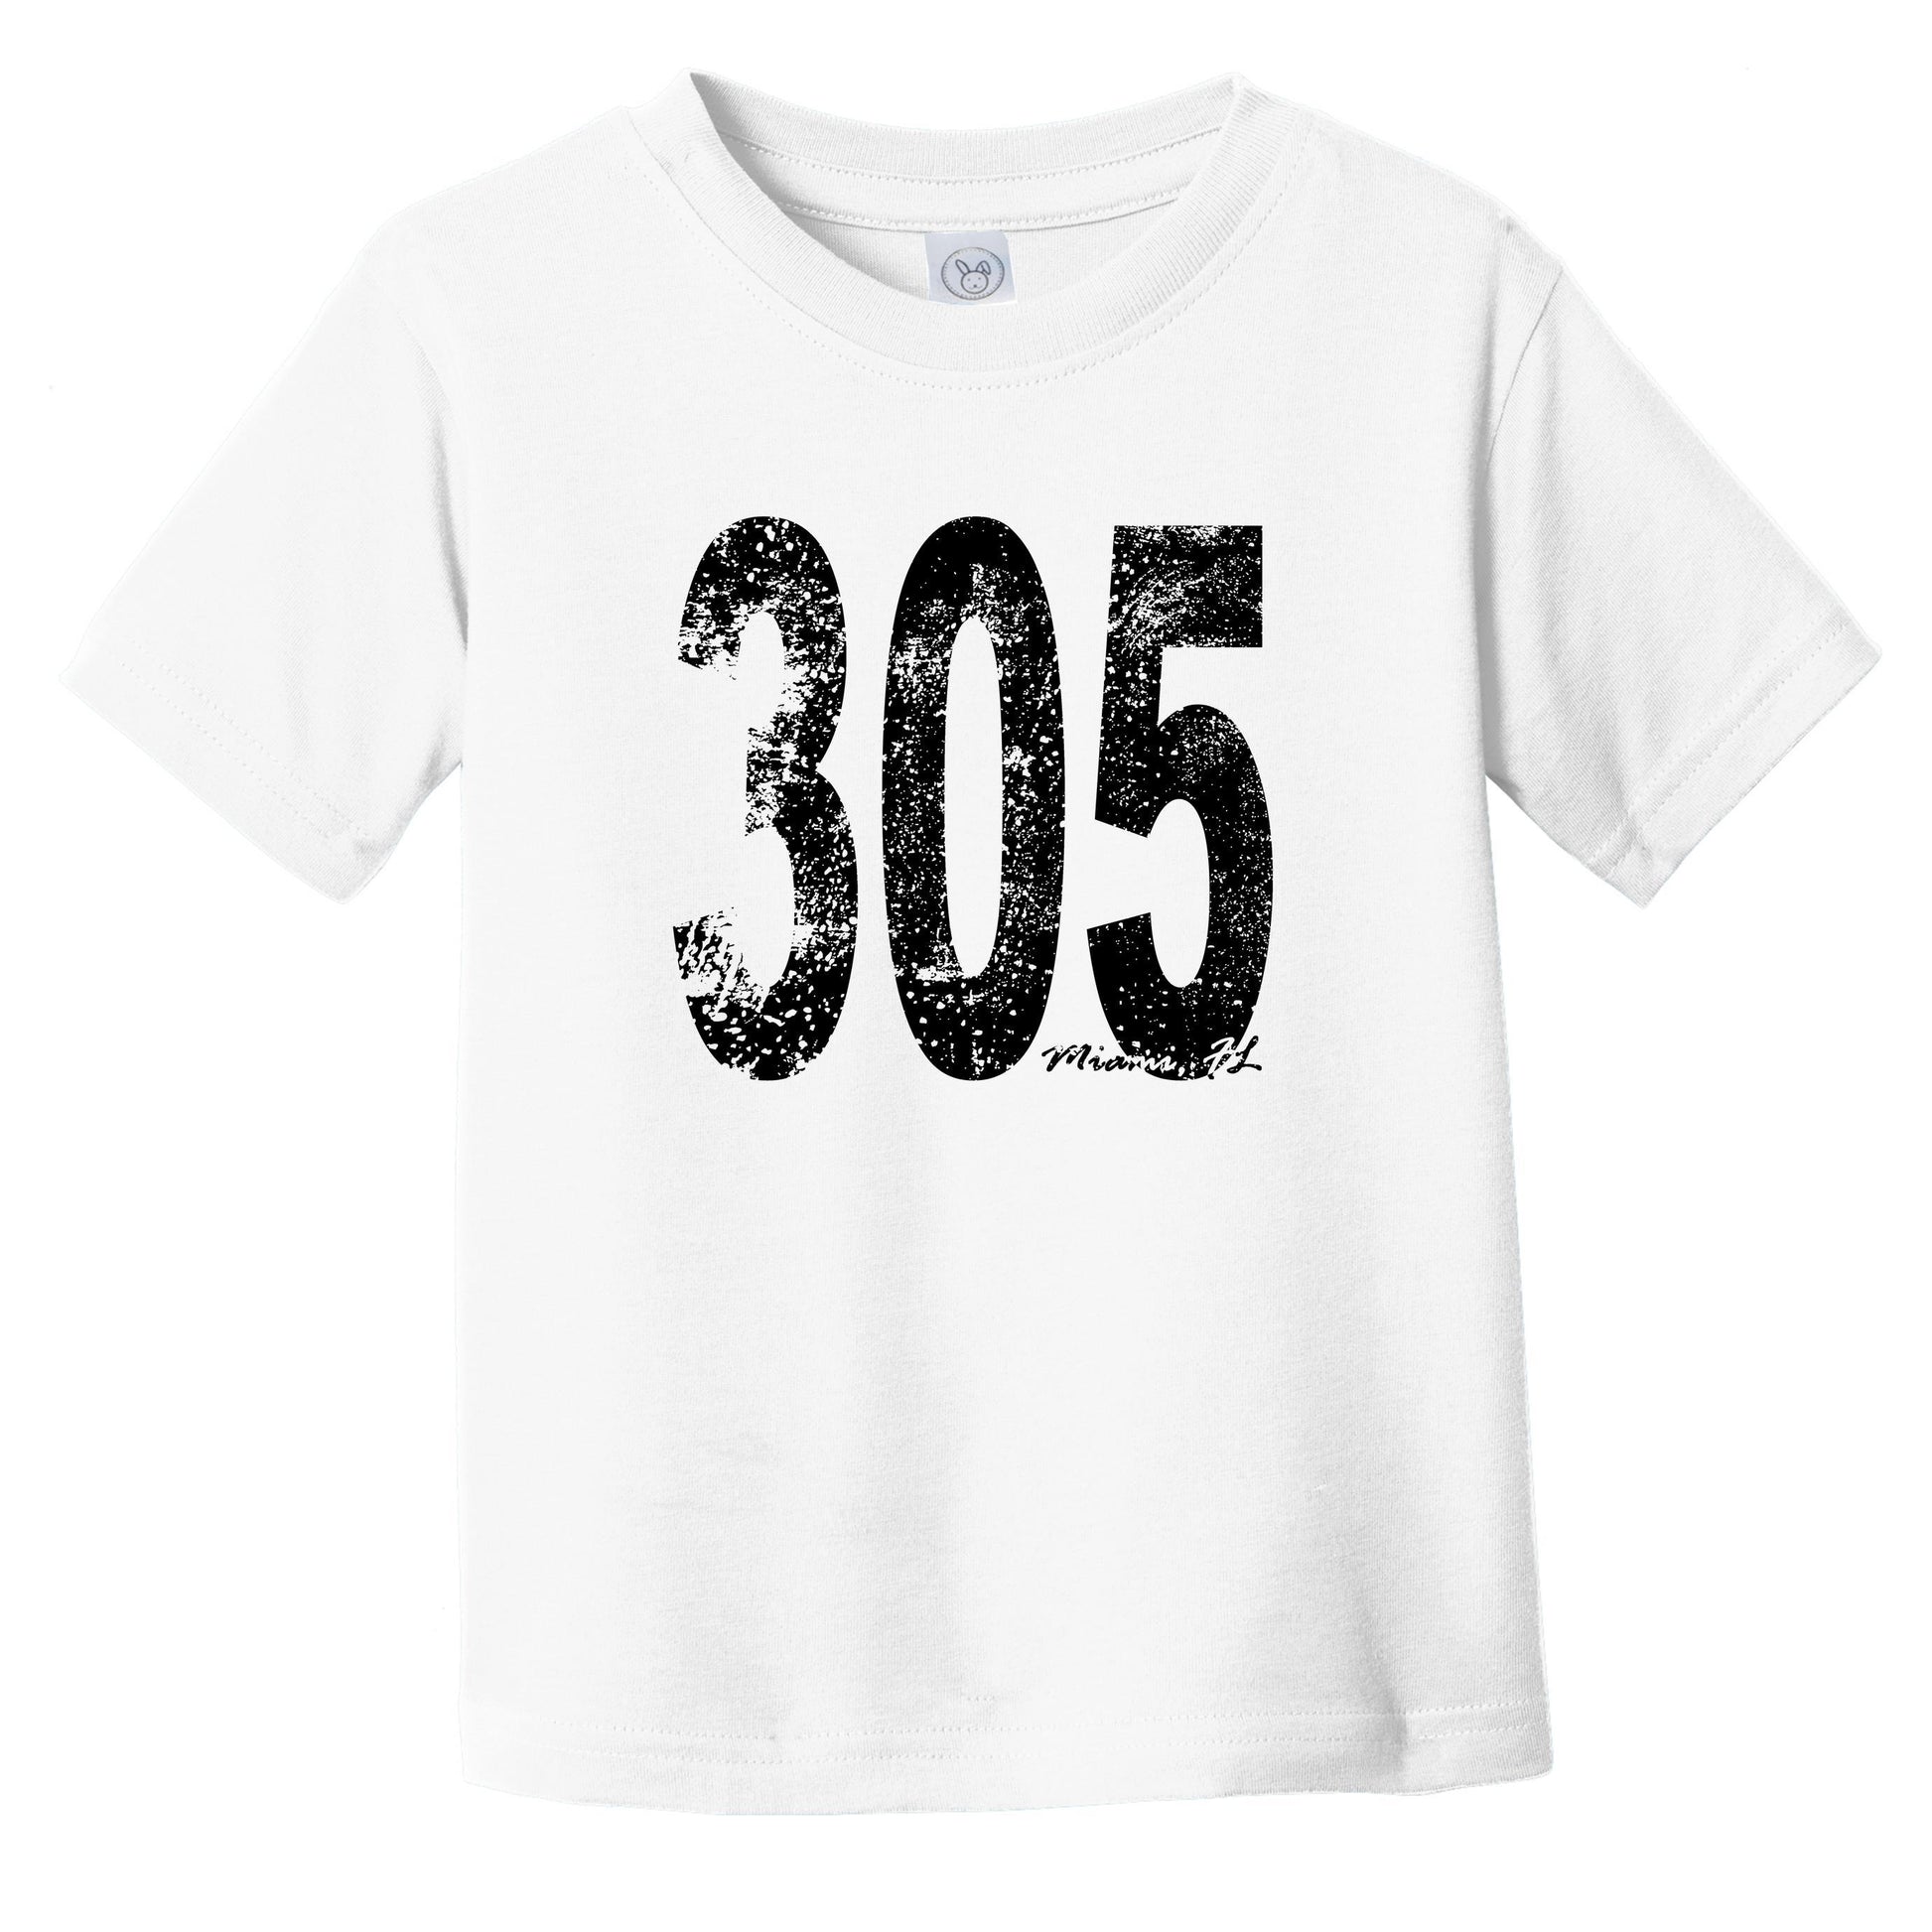 305 Miami Florida Area Code Infant Toddler T-Shirt